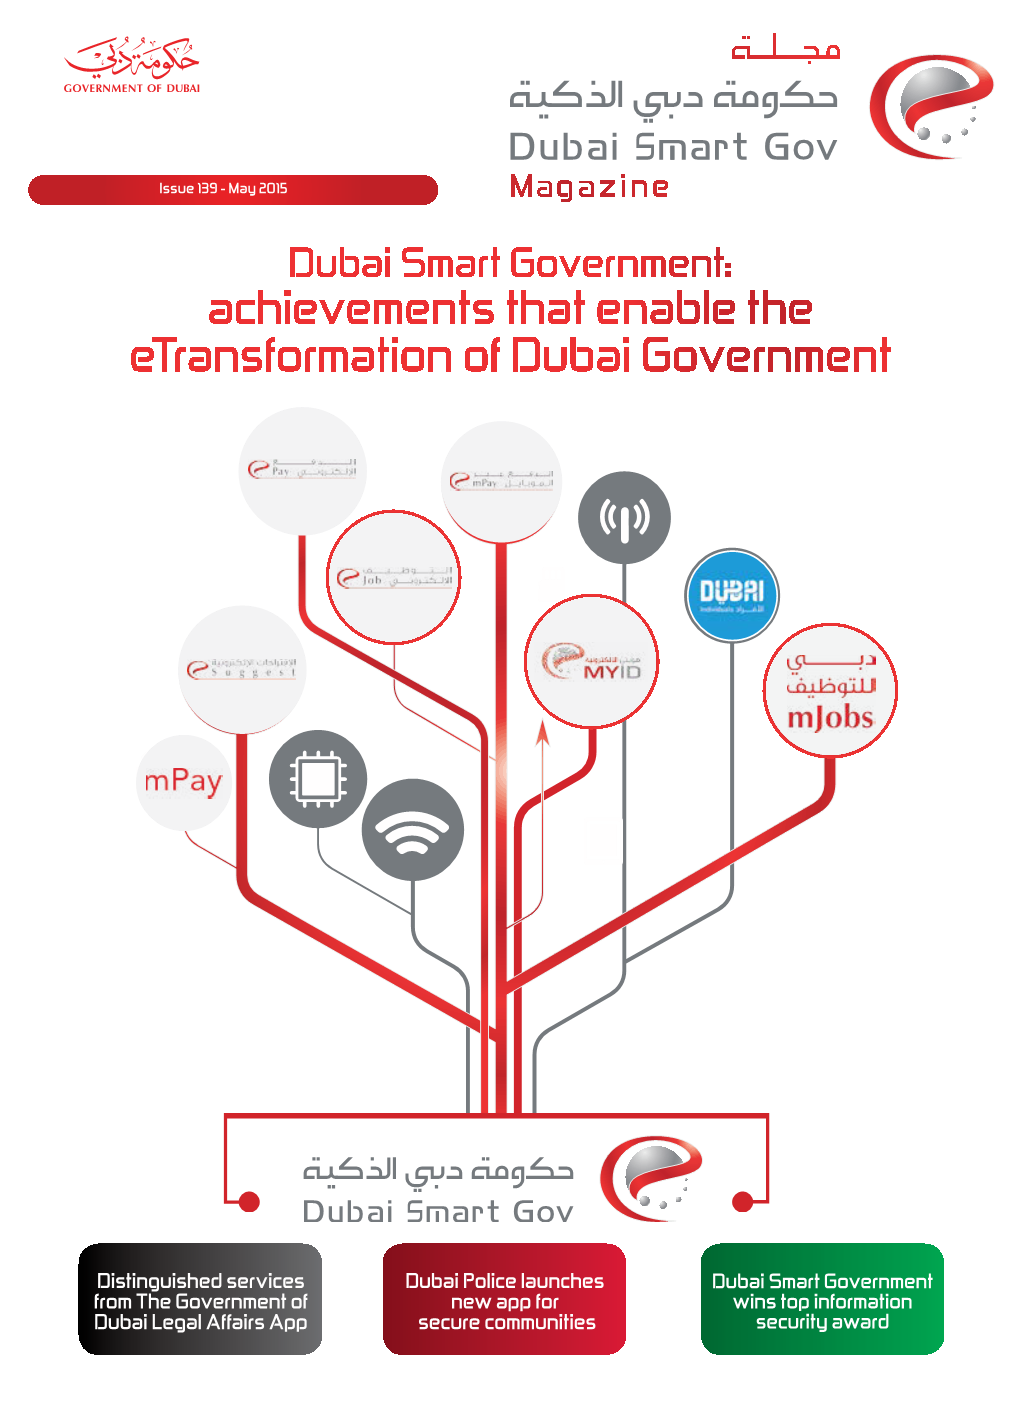 Achievements That Enable the Etransformation of Dubai Government